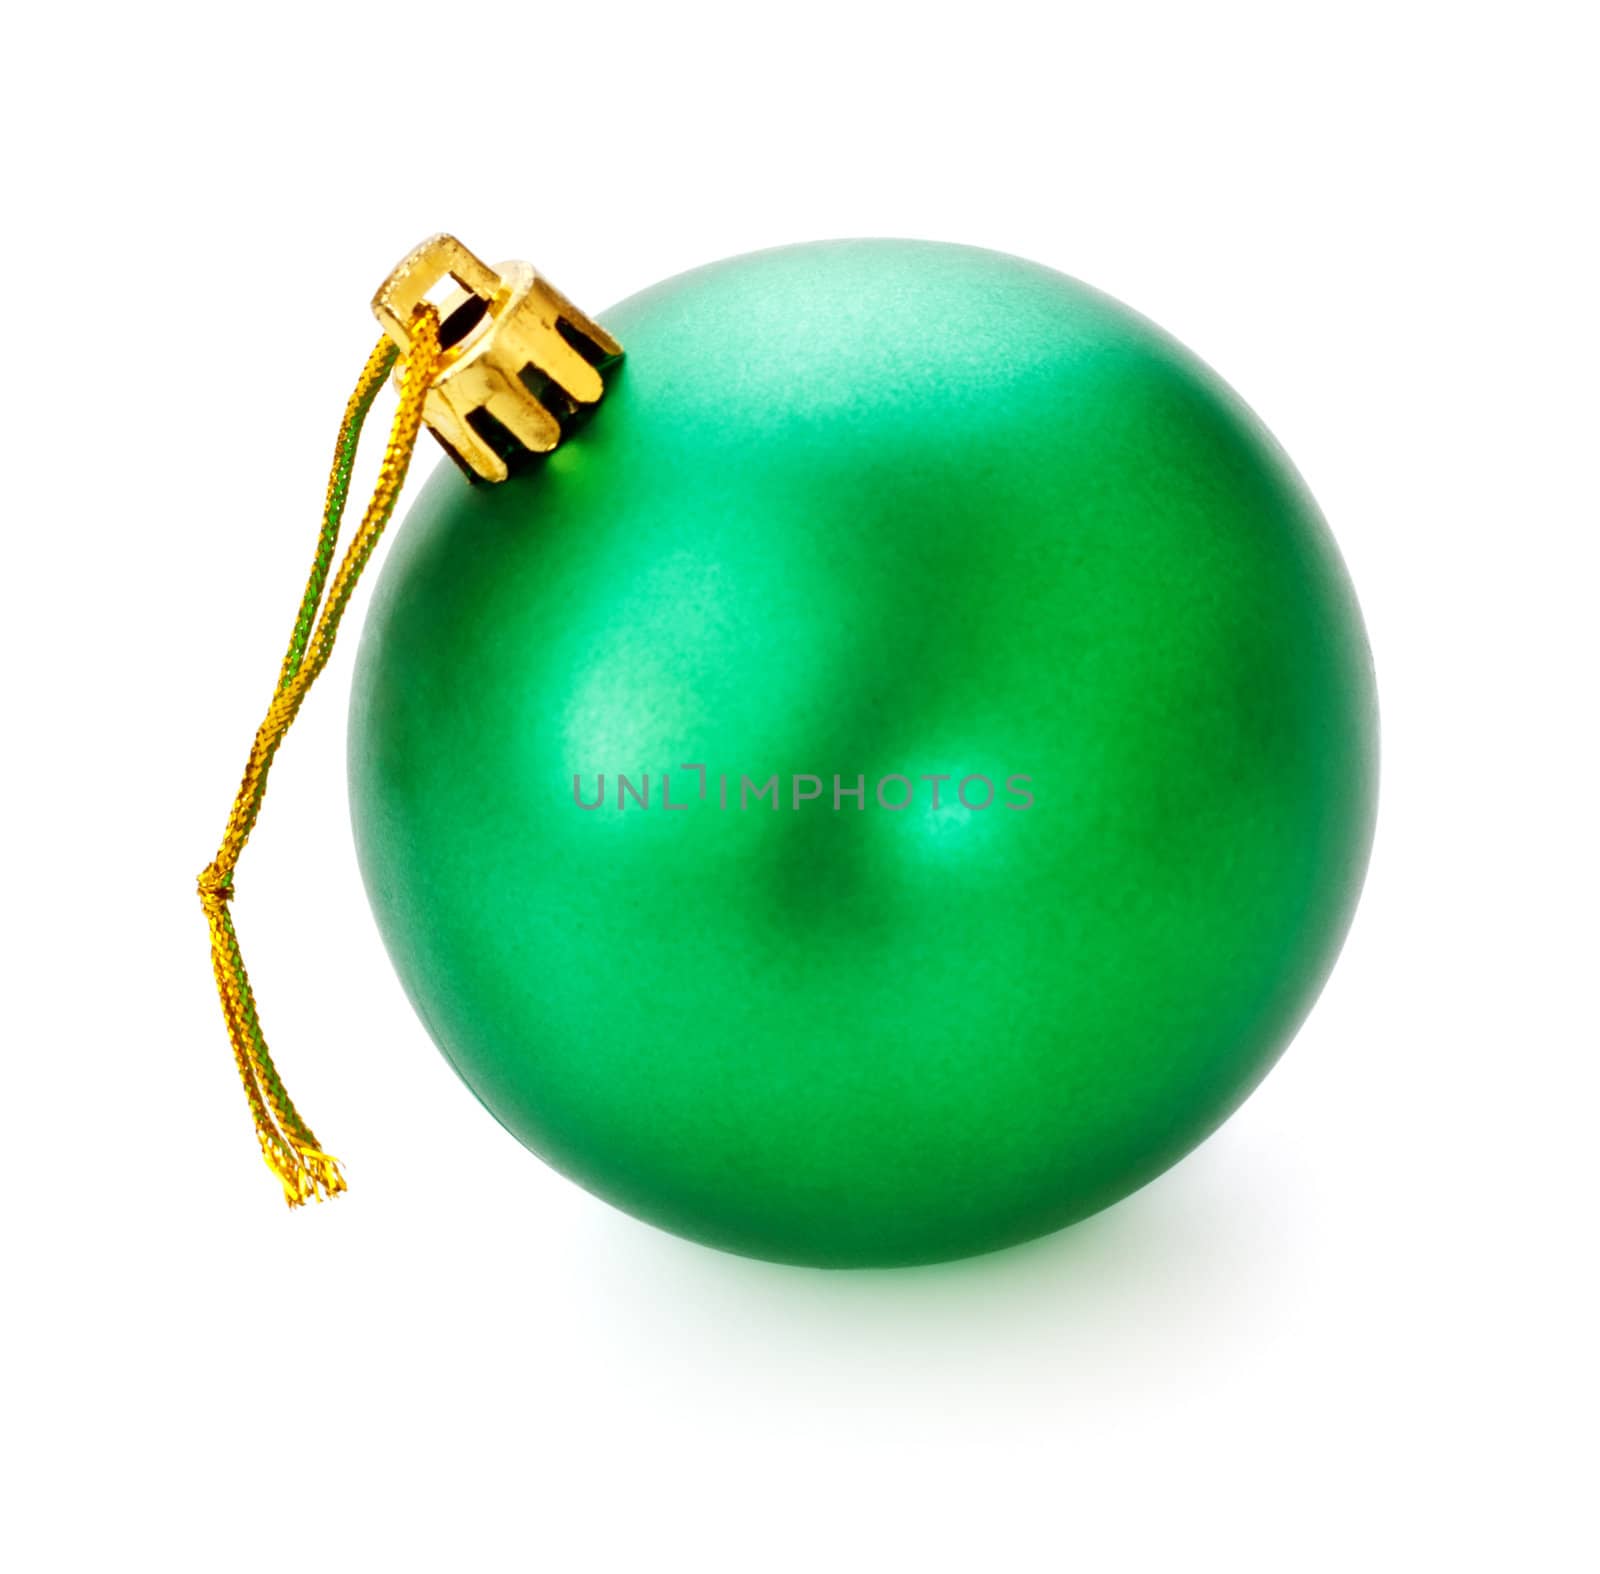 Green Christmas Ball by petr_malyshev